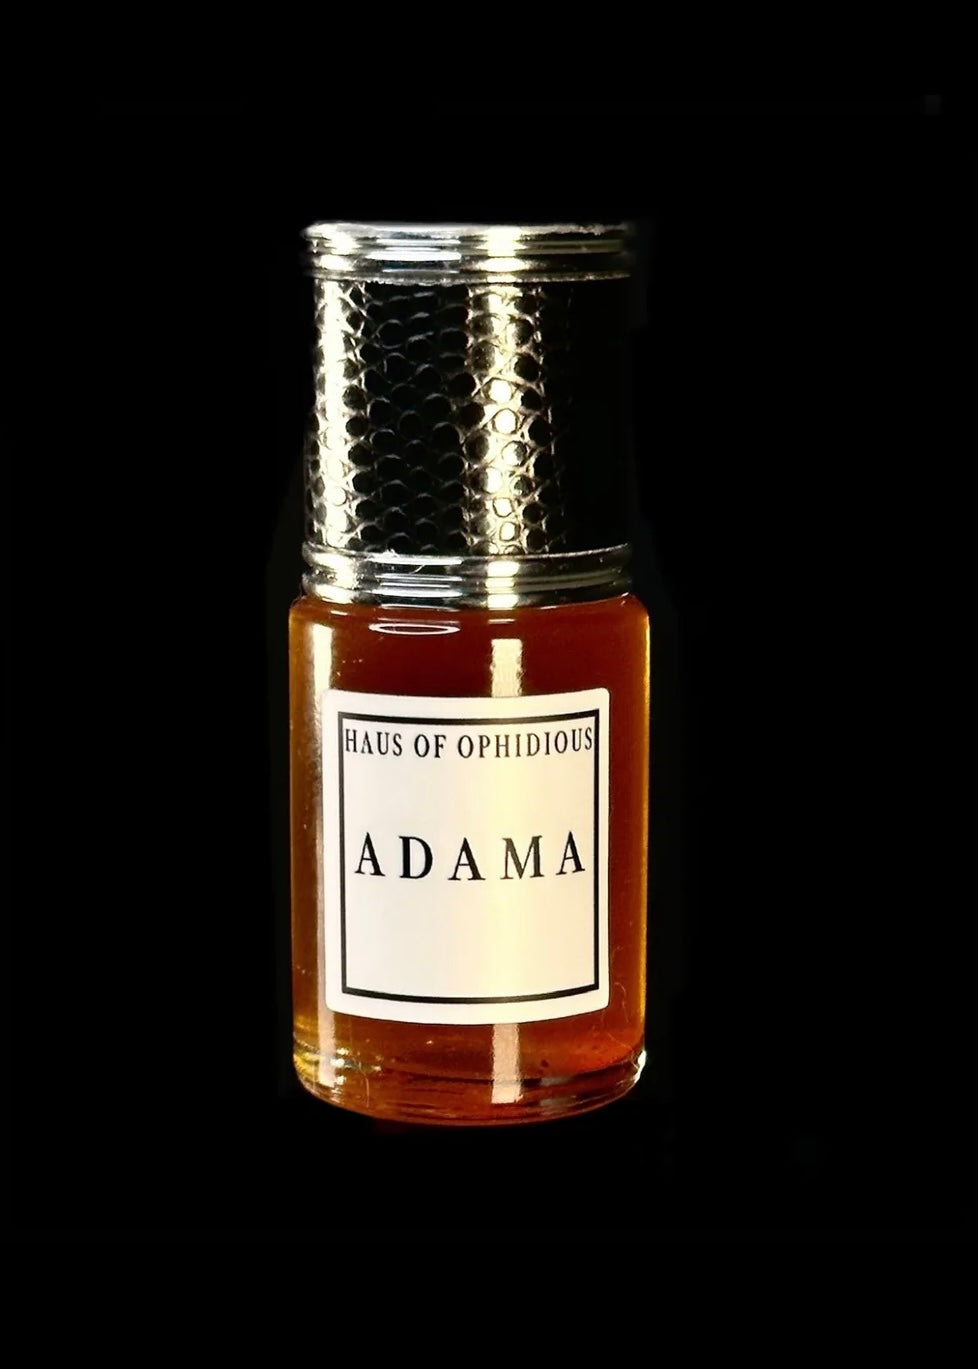 The Oil Adama